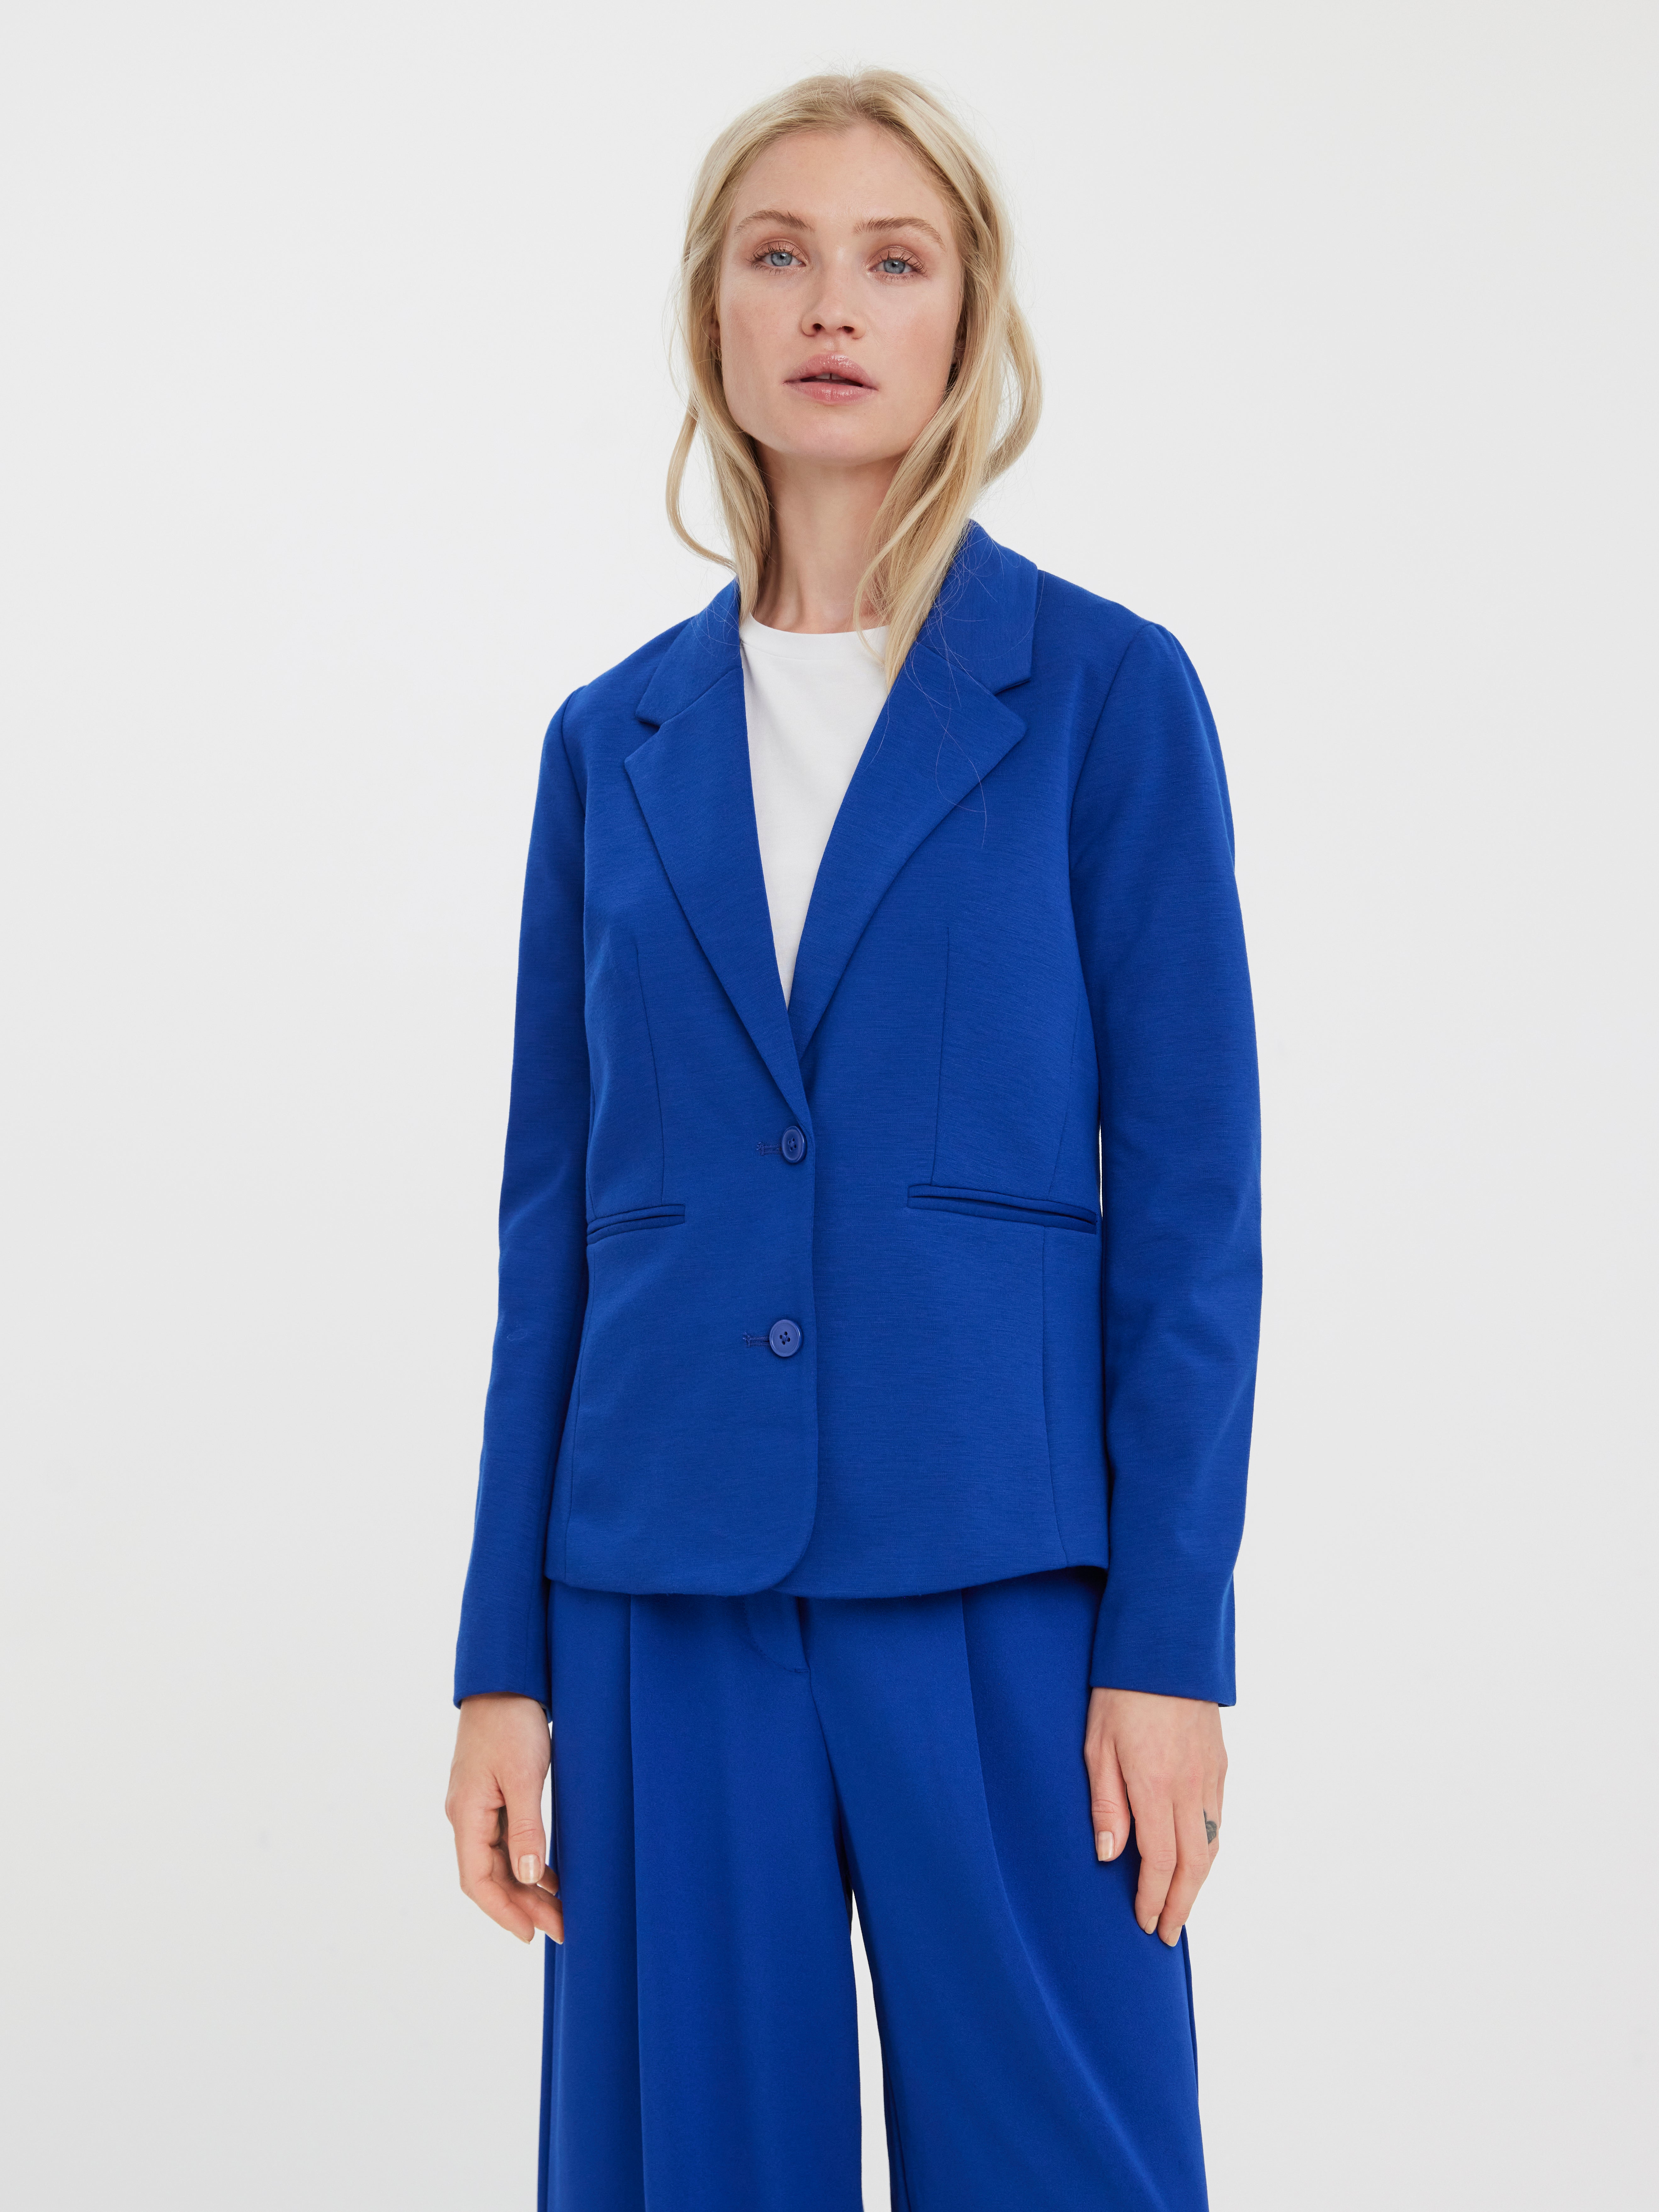 Odi Et Amo Denim Suit Jacket in Dark Blue Blue sport coats and suit jackets Womens Clothing Jackets Blazers 